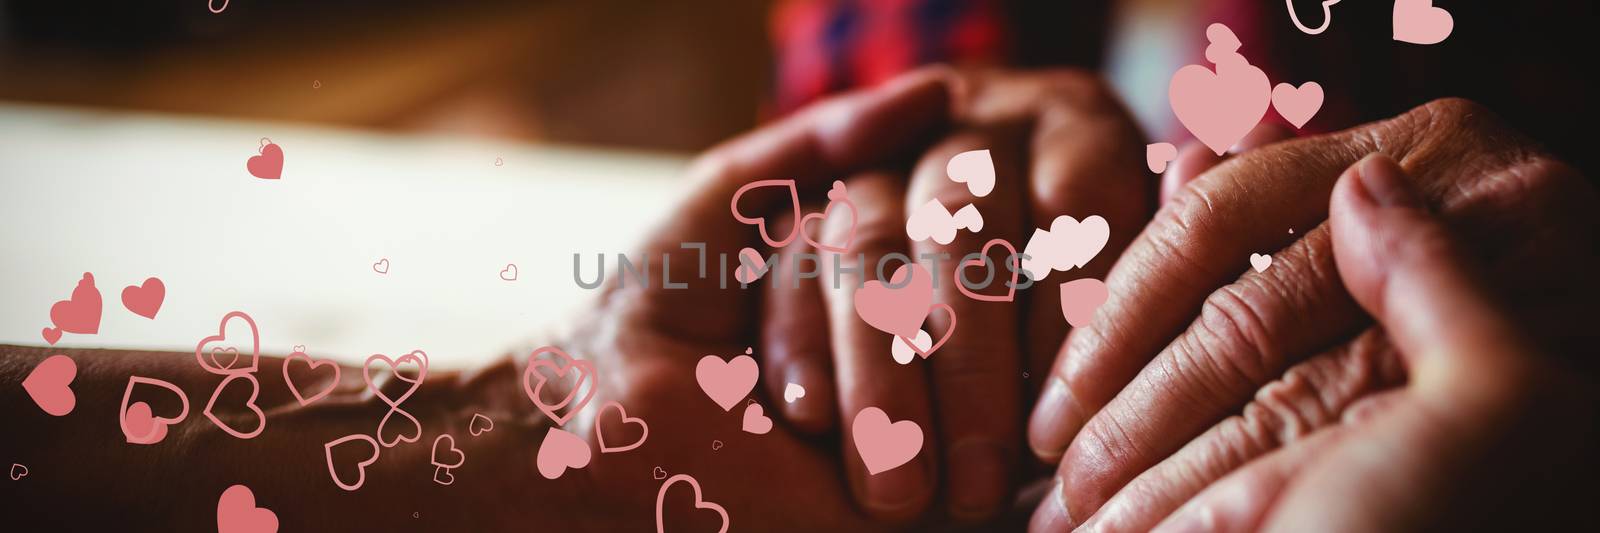 Valentines heart design against senior couple holding hands